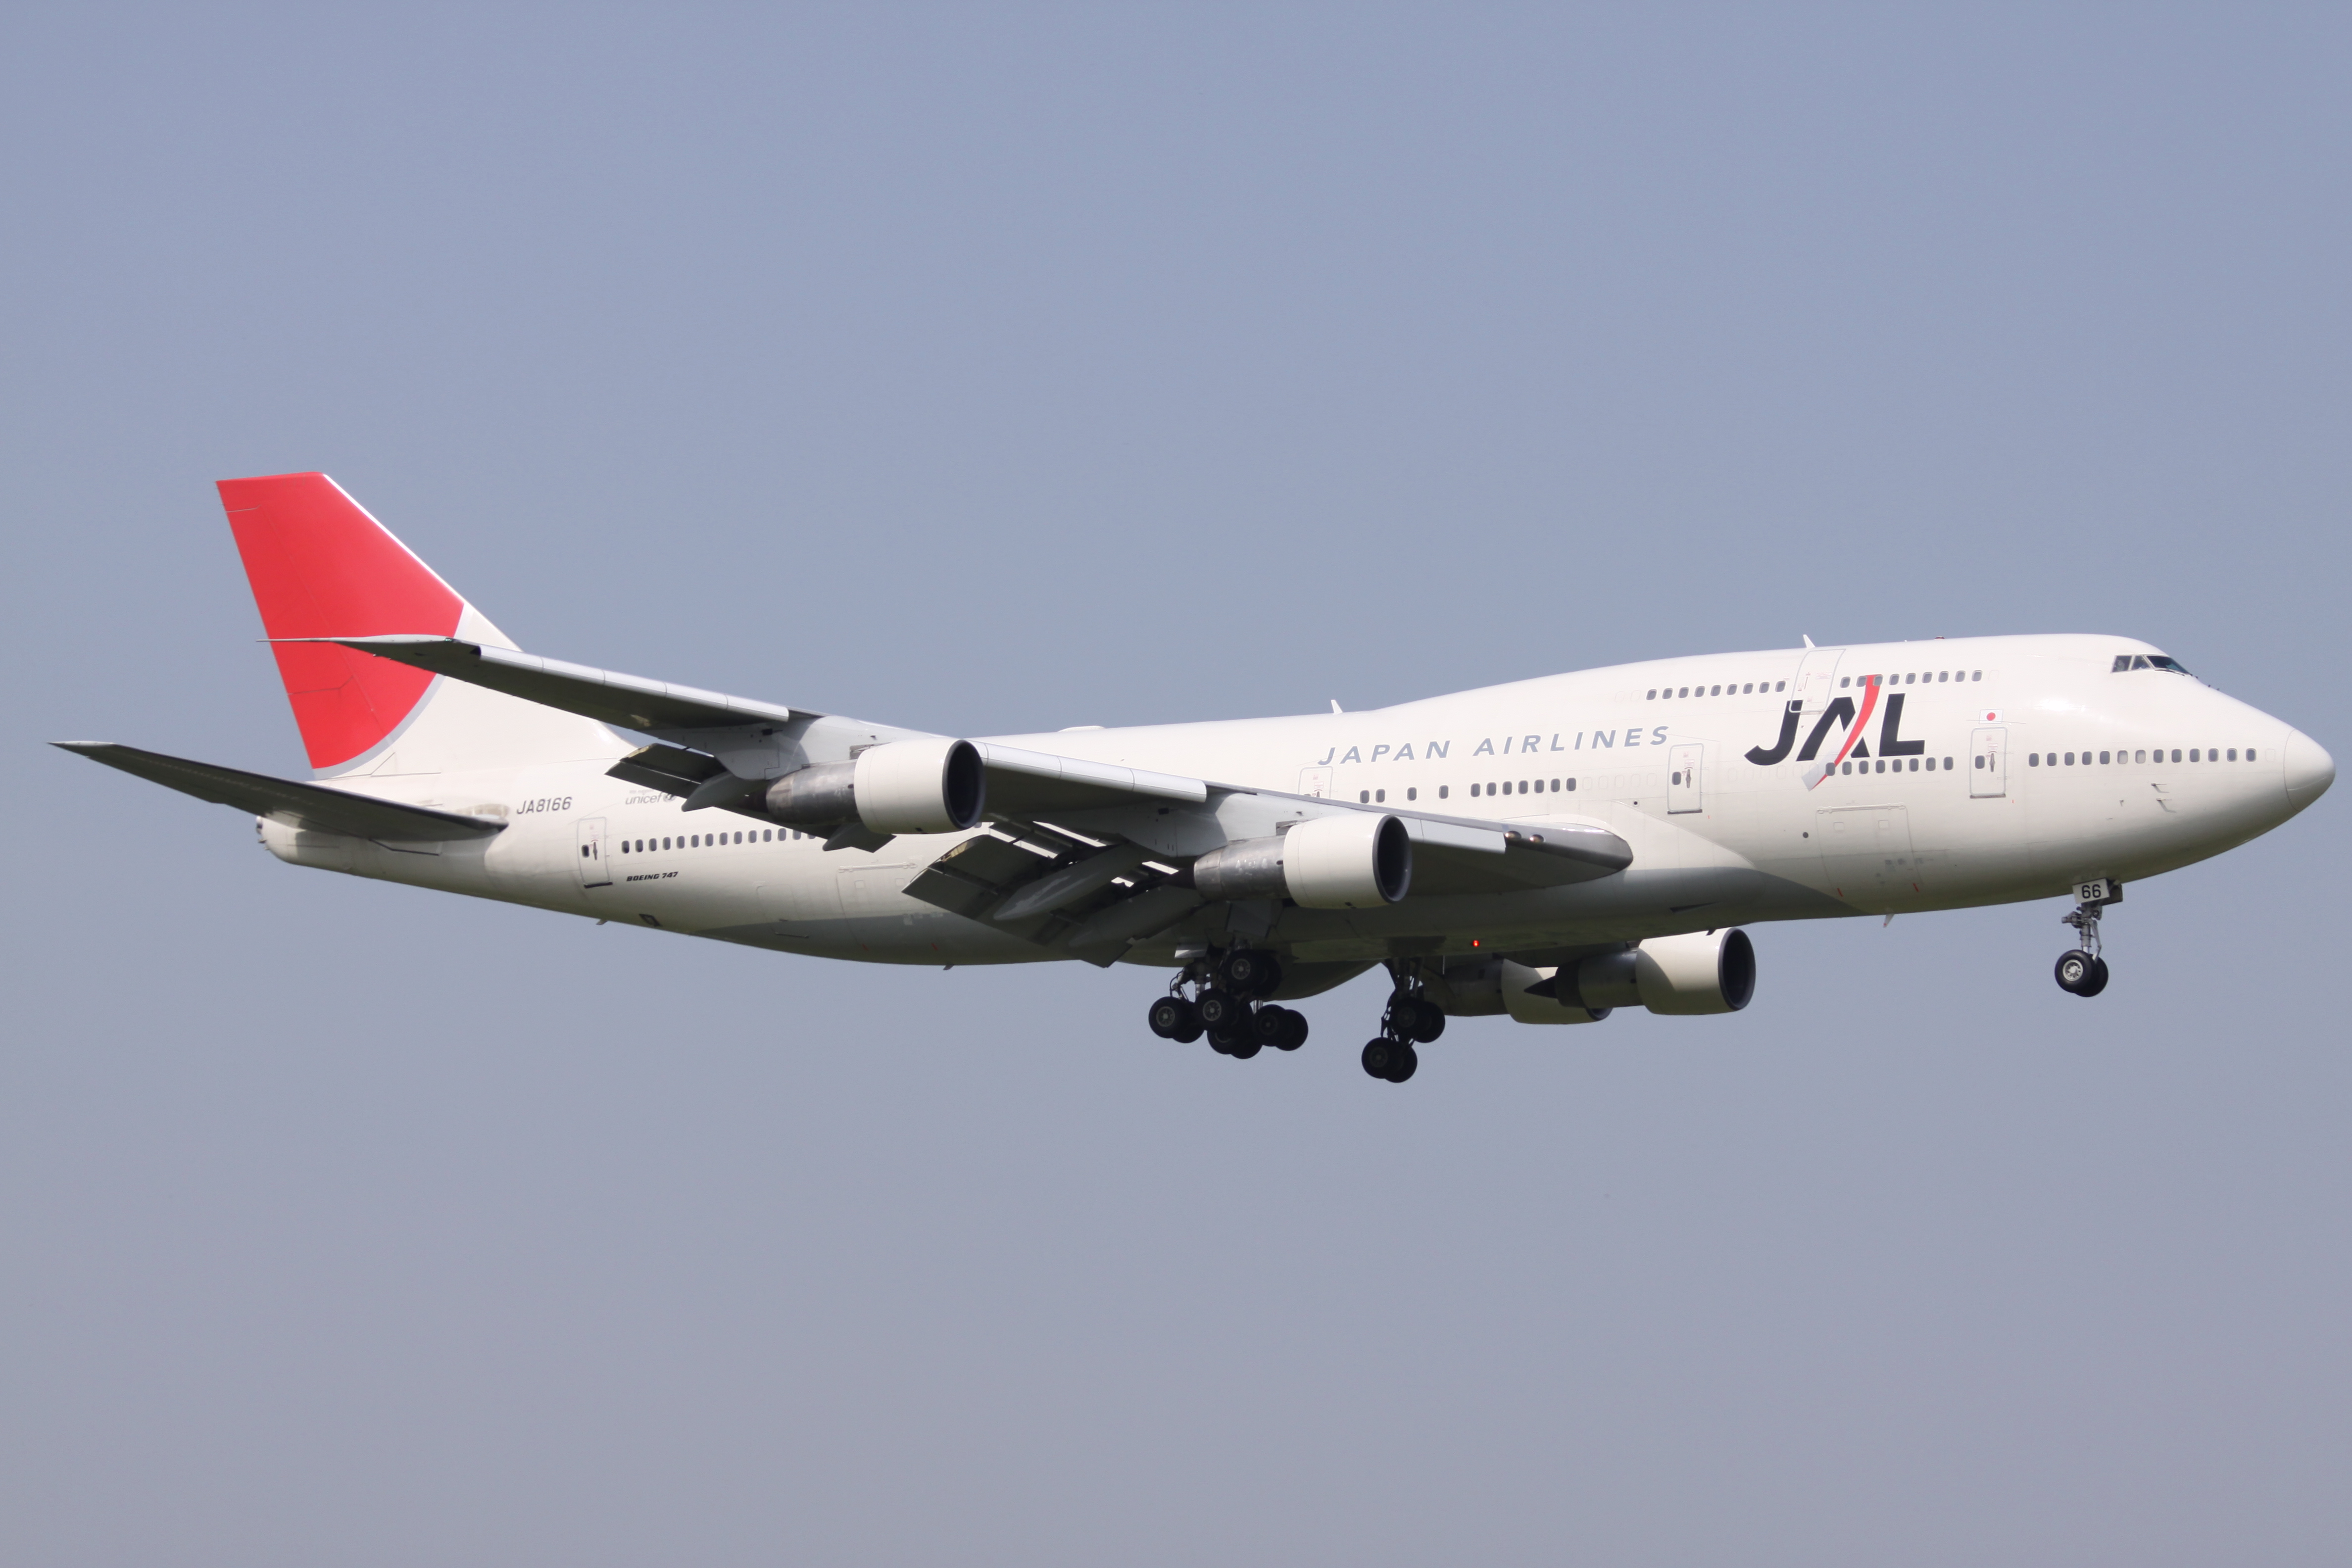 File:JAL B747-300(JA8166) (3518575352).jpg - Wikimedia Commons